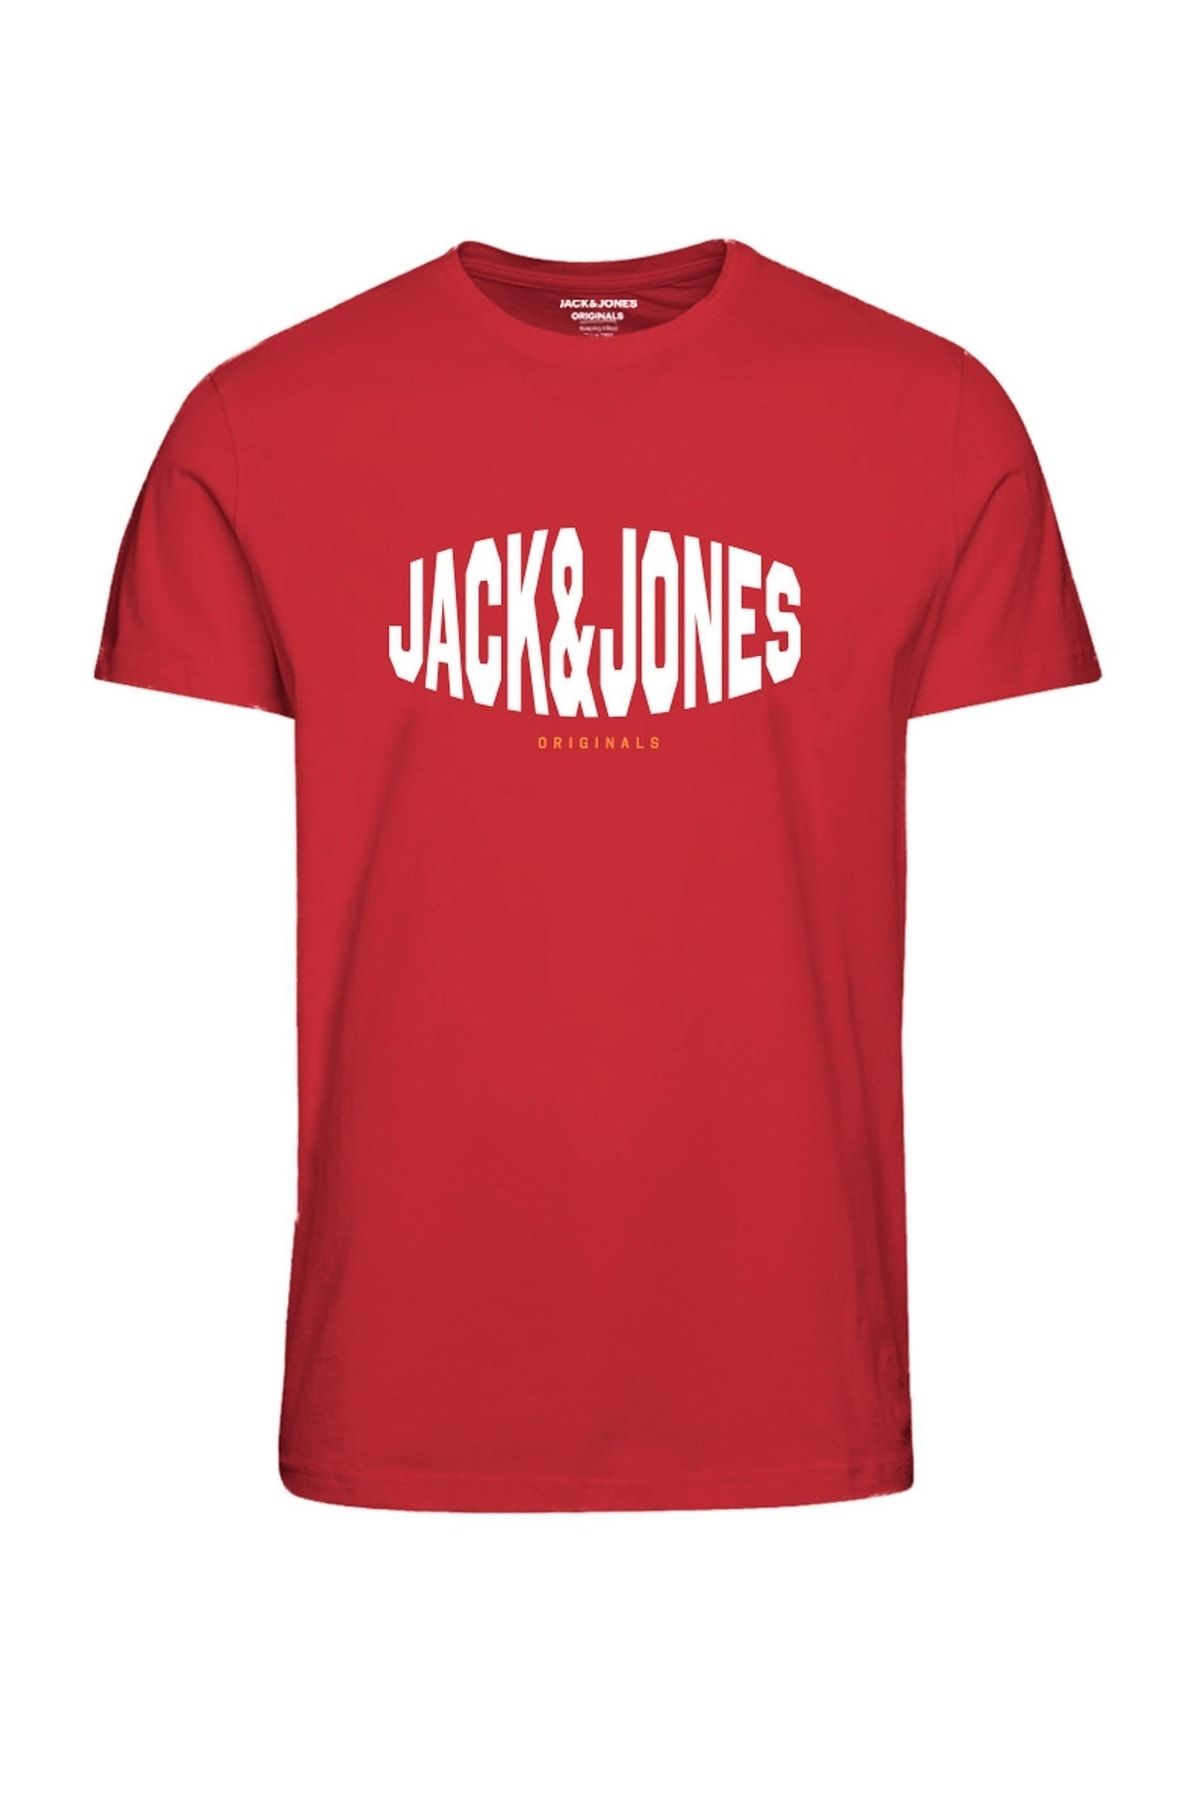 Jack & Jones Jack Jones Marque Tee Ss Crew Neck Fst Erkek Kırmızı Tshirt 12232652-17